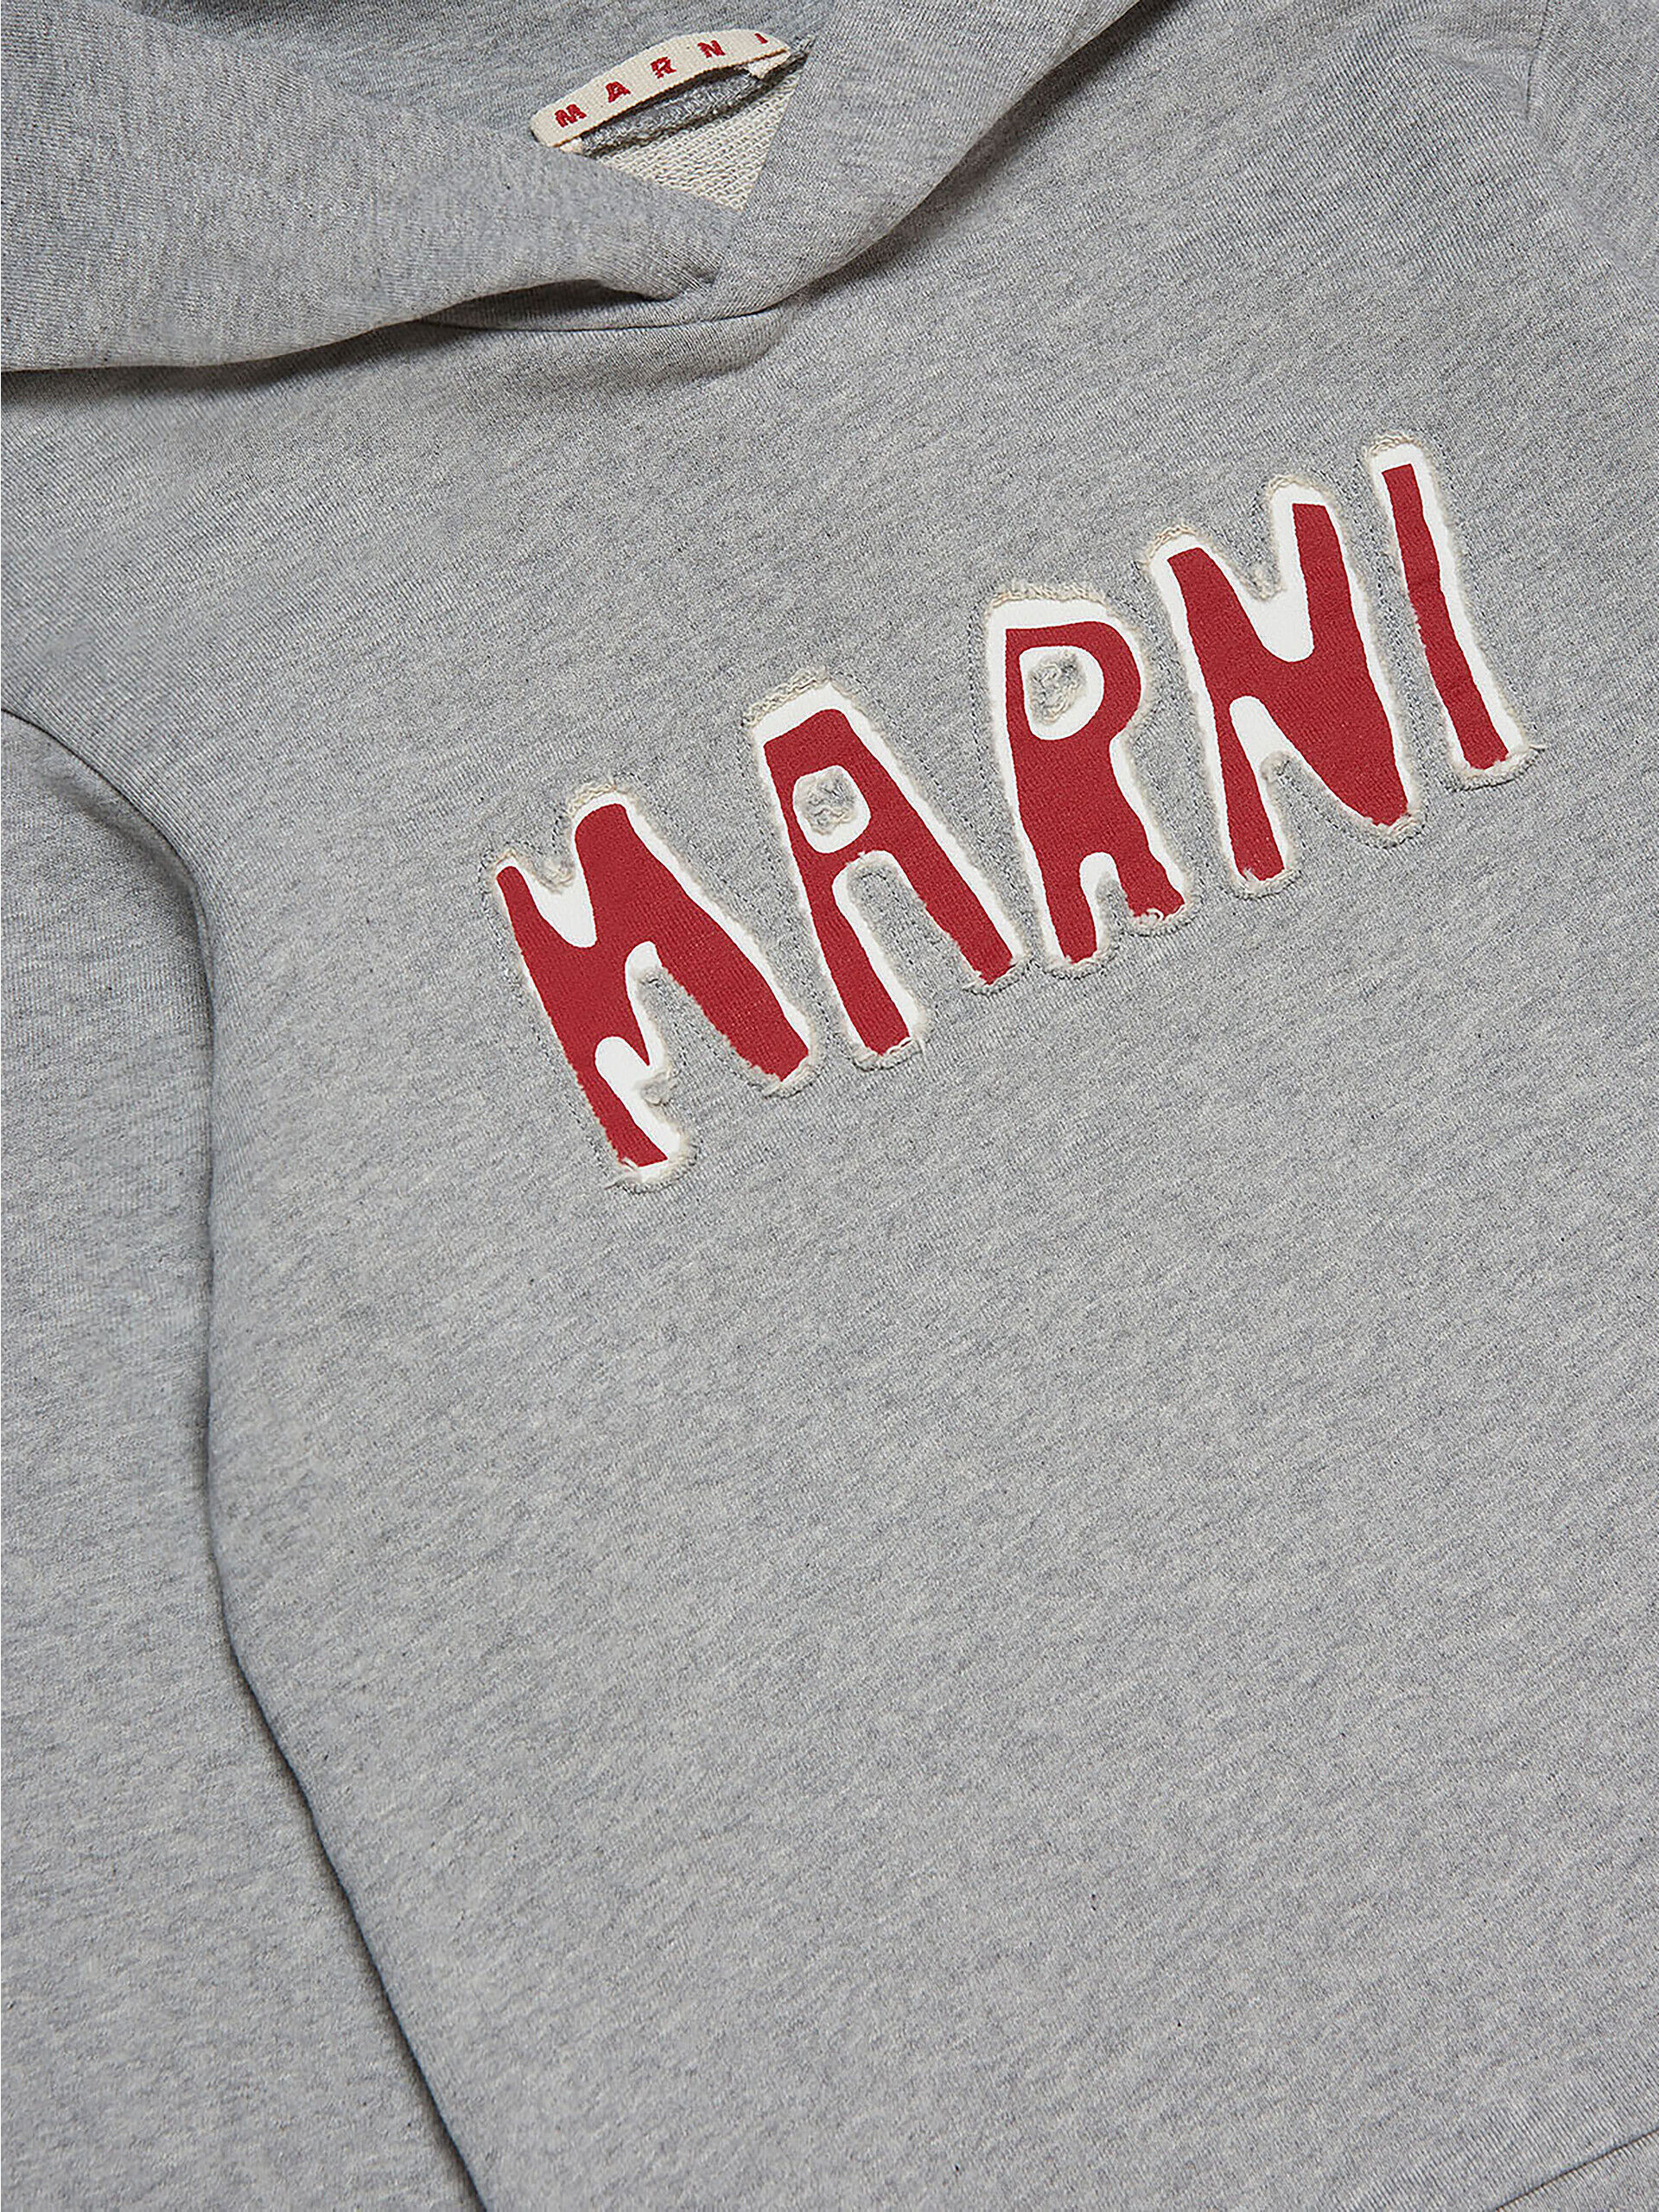 Grey cotton hooded sweatshirt with logo | Marni